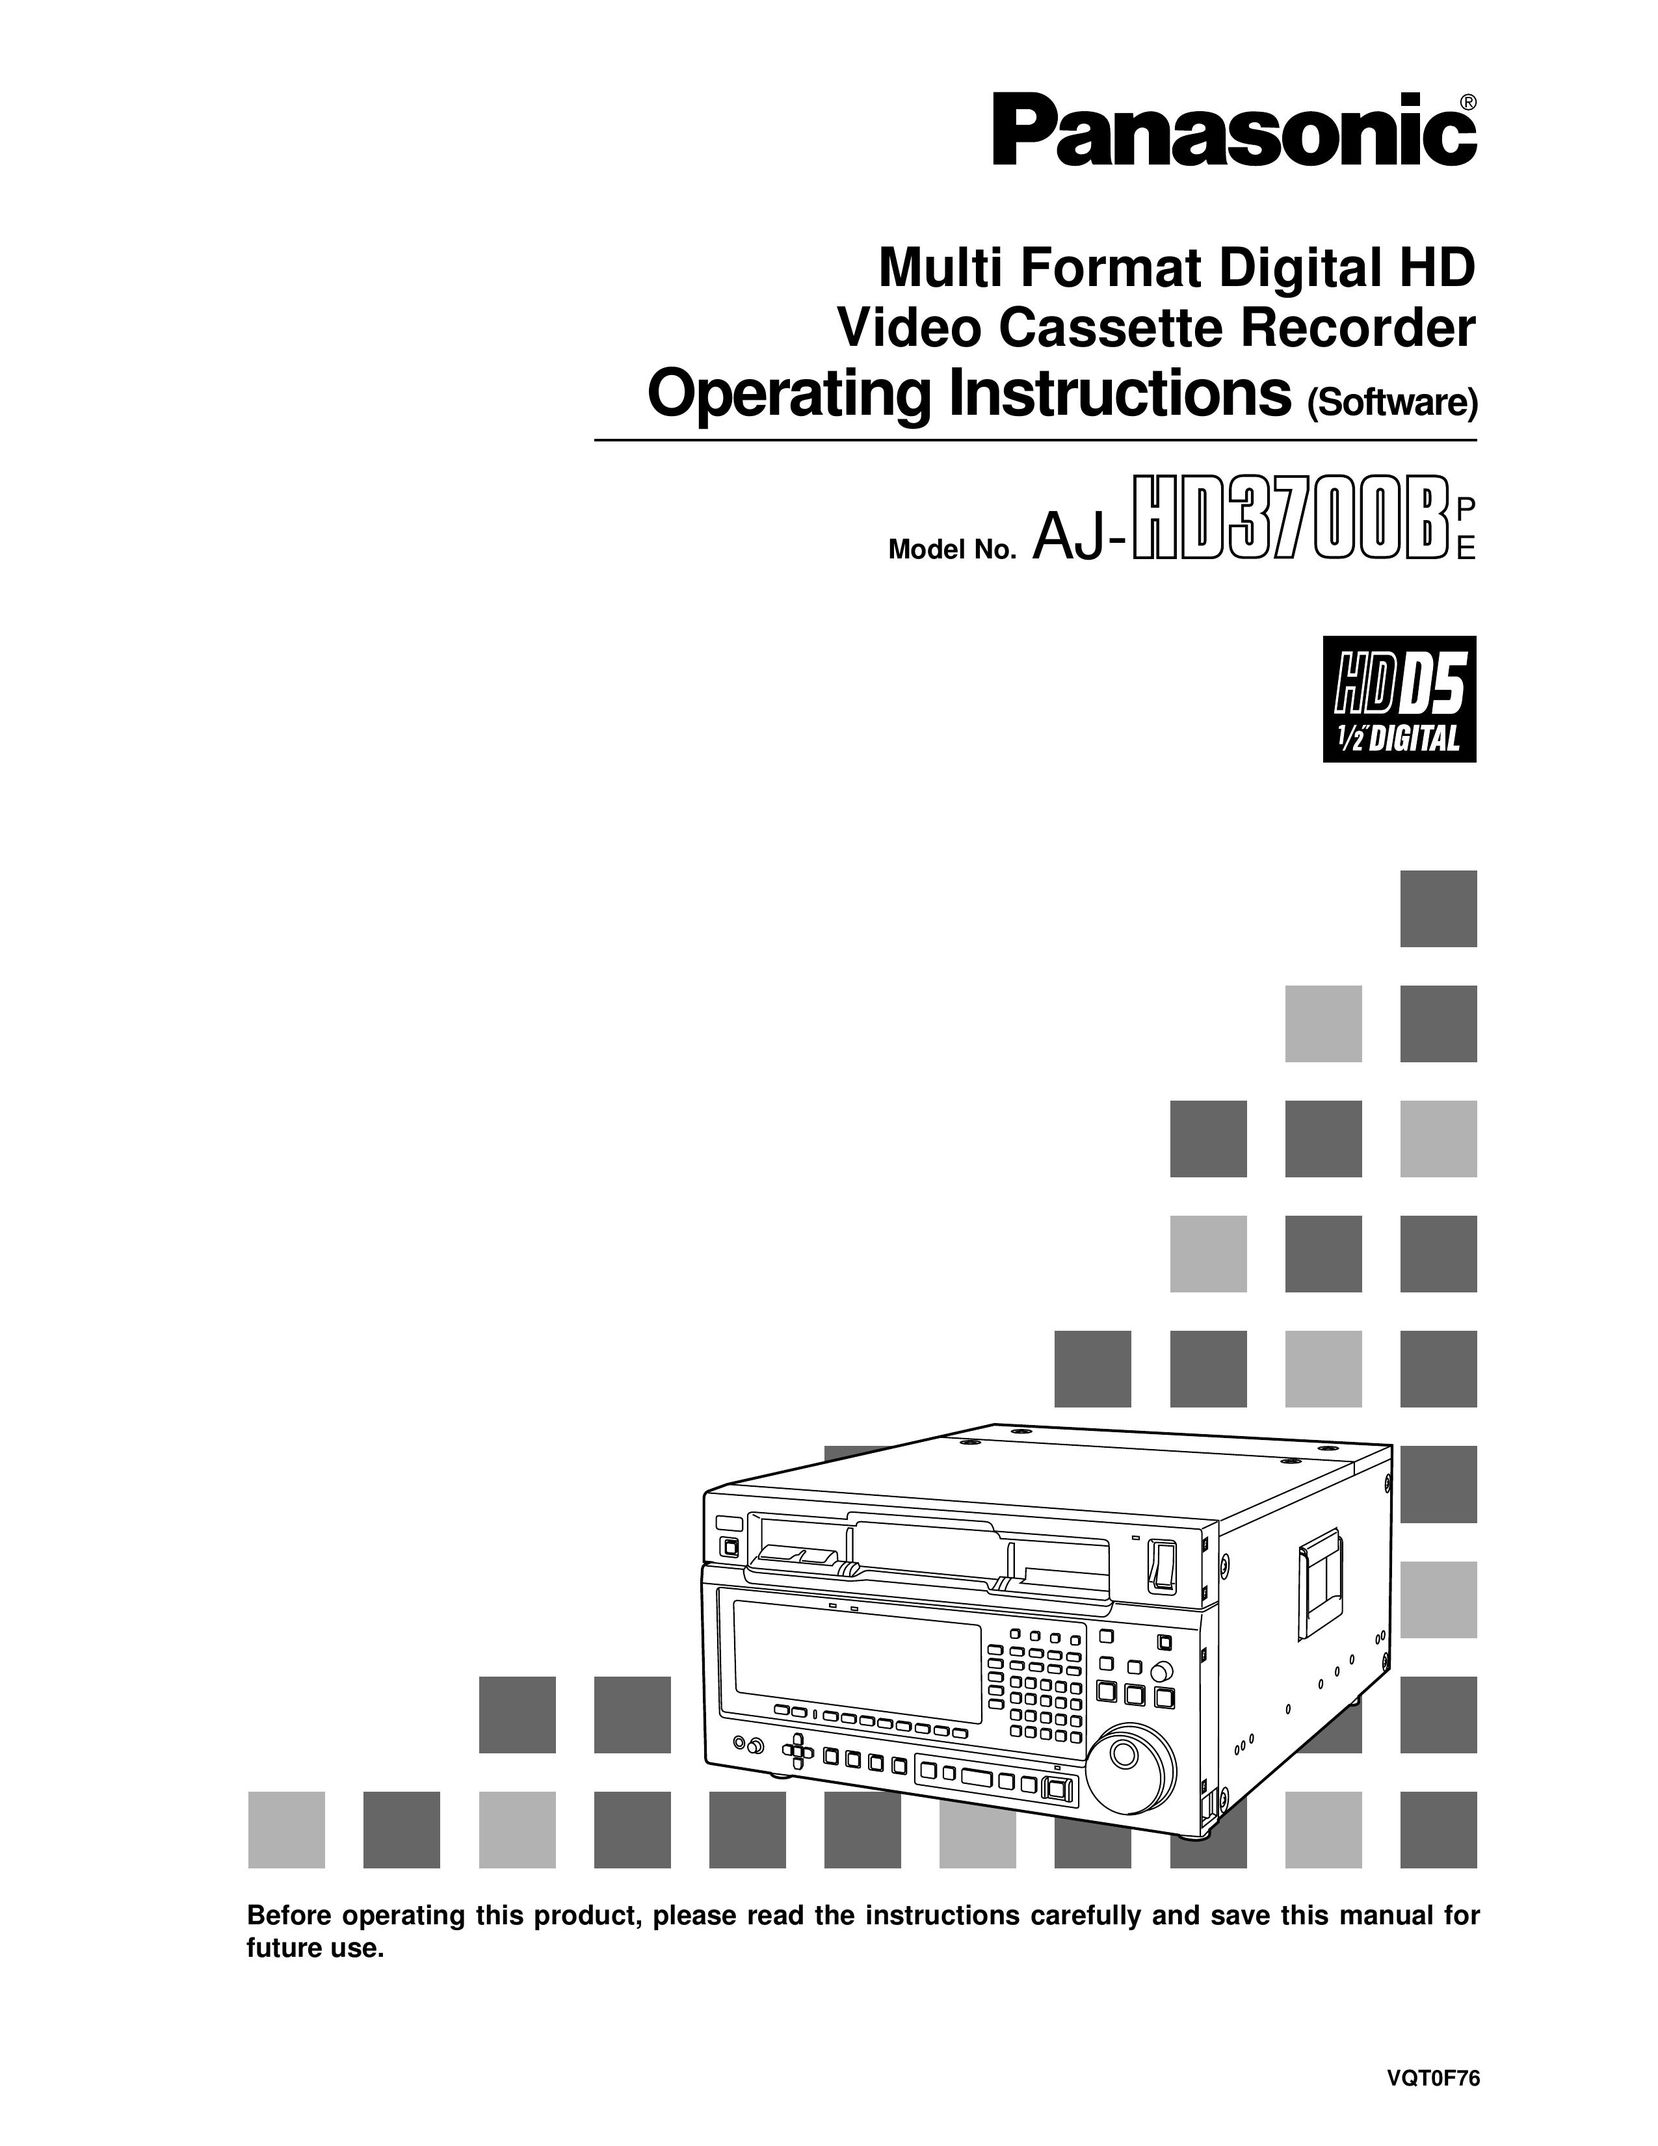 Panasonic AJ-HD3000 VCR User Manual